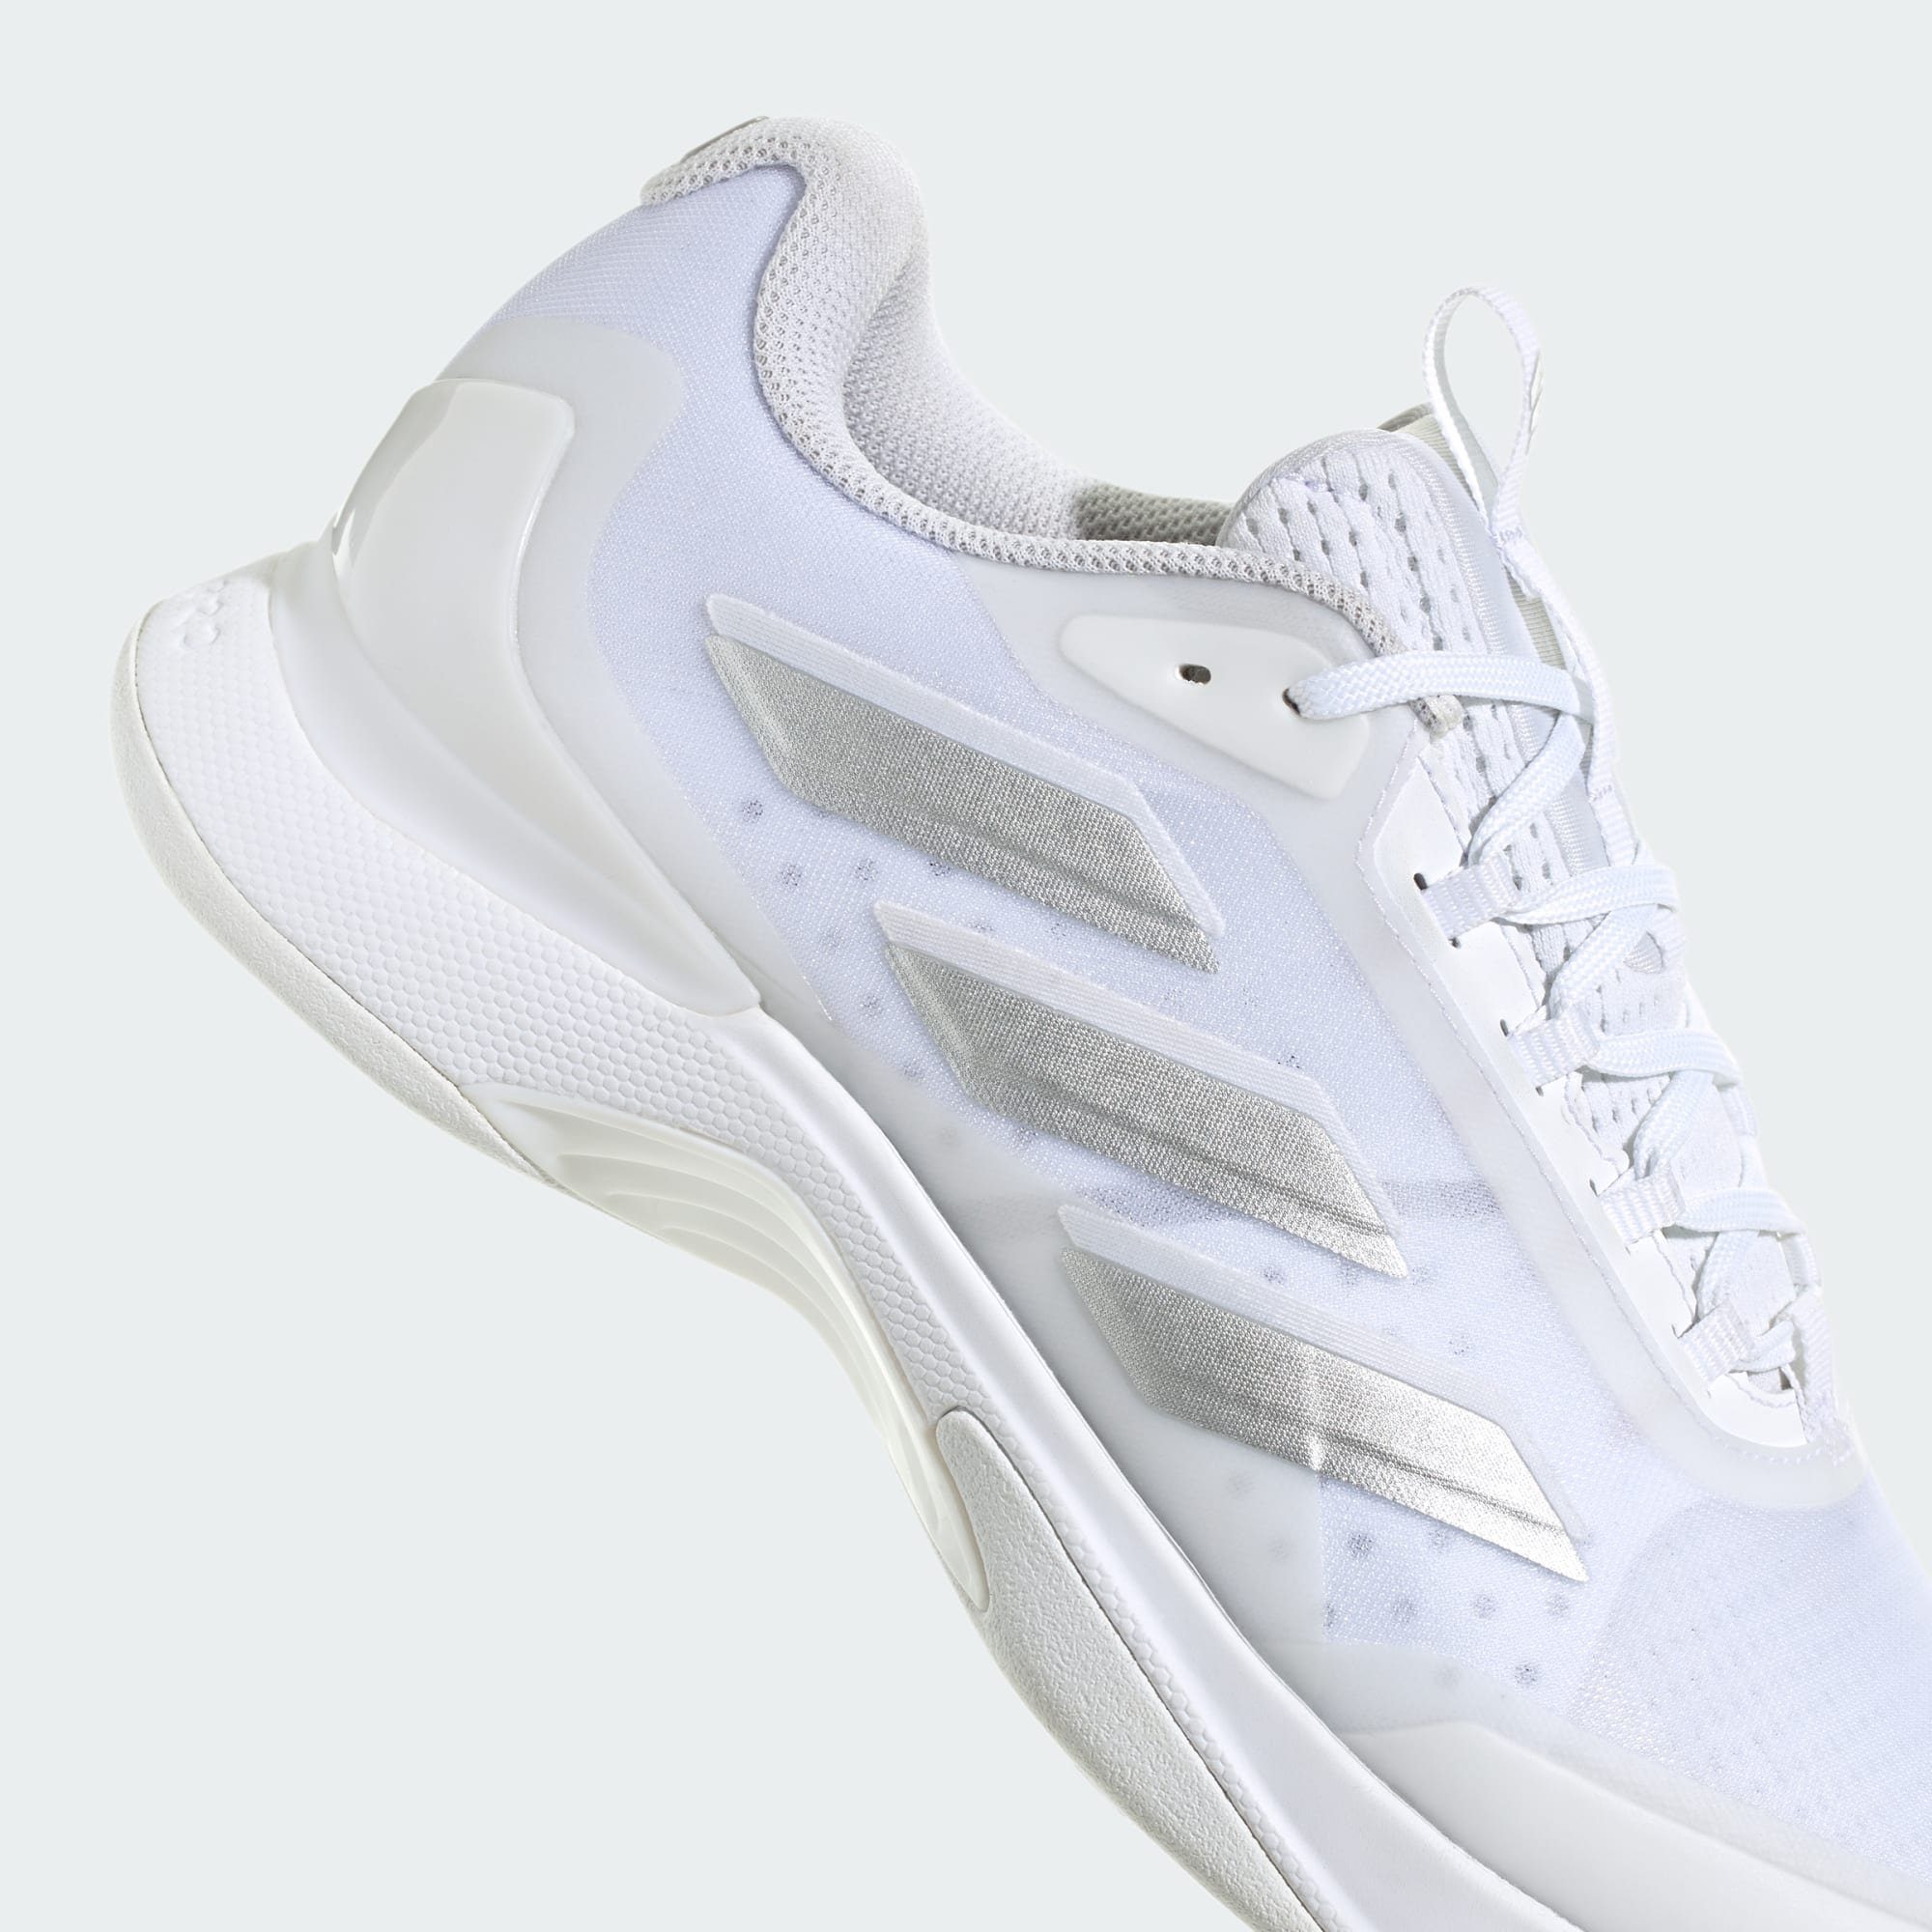 AVACOURT White Indoorschuh One / Performance / Silver Cloud TENNISSCHUH Grey adidas Metallic 2